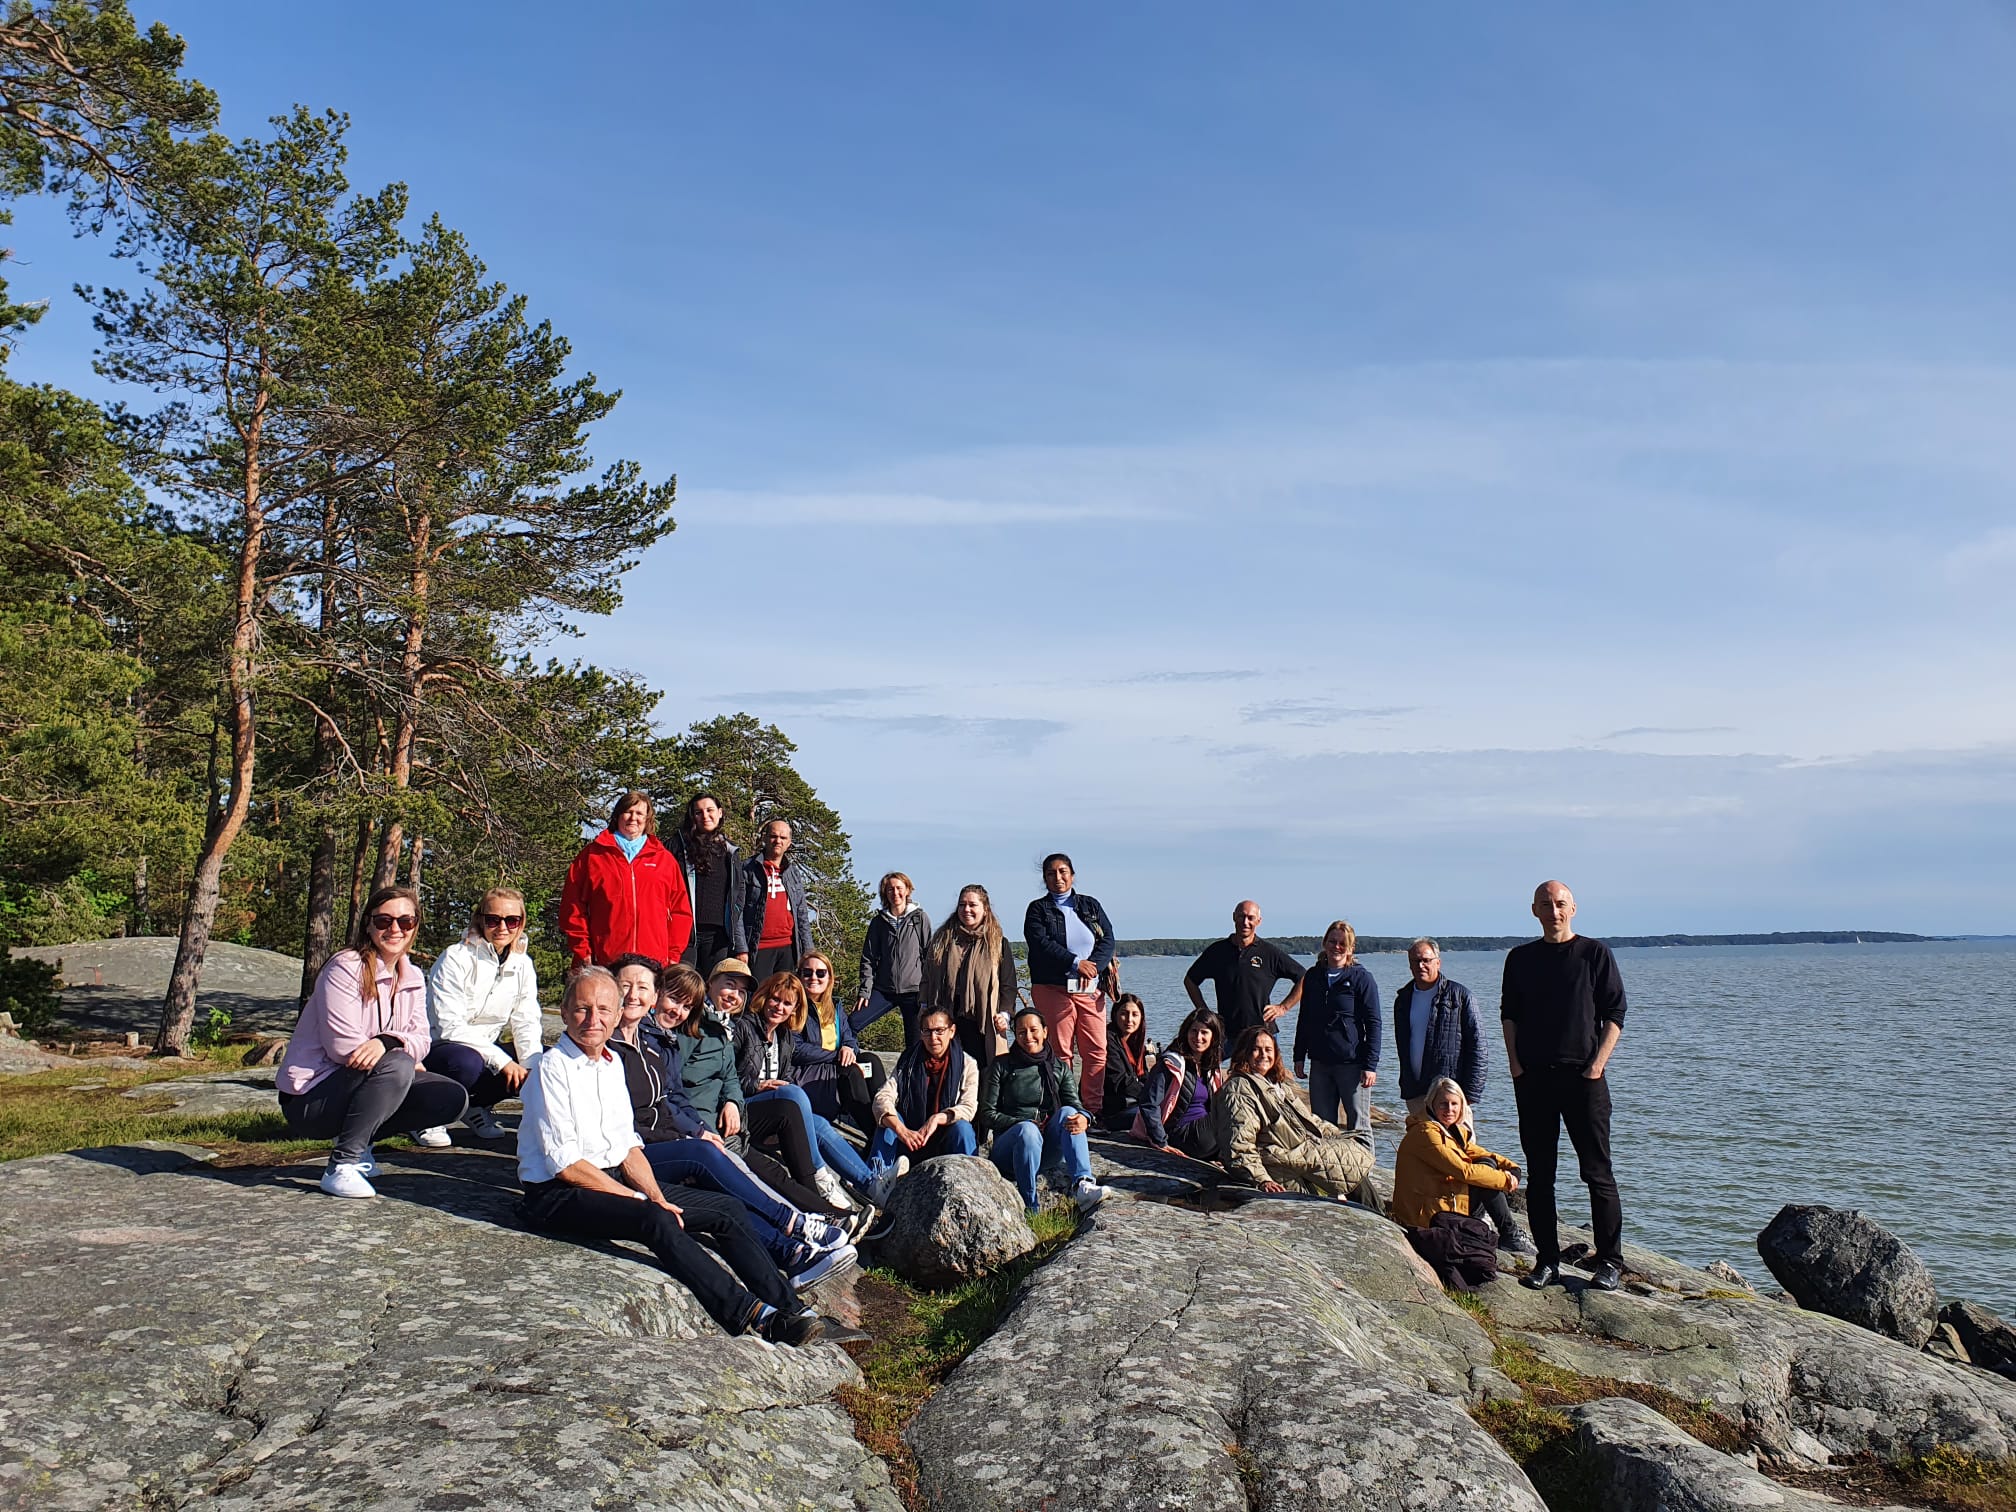 Group photo in Ruissalo island